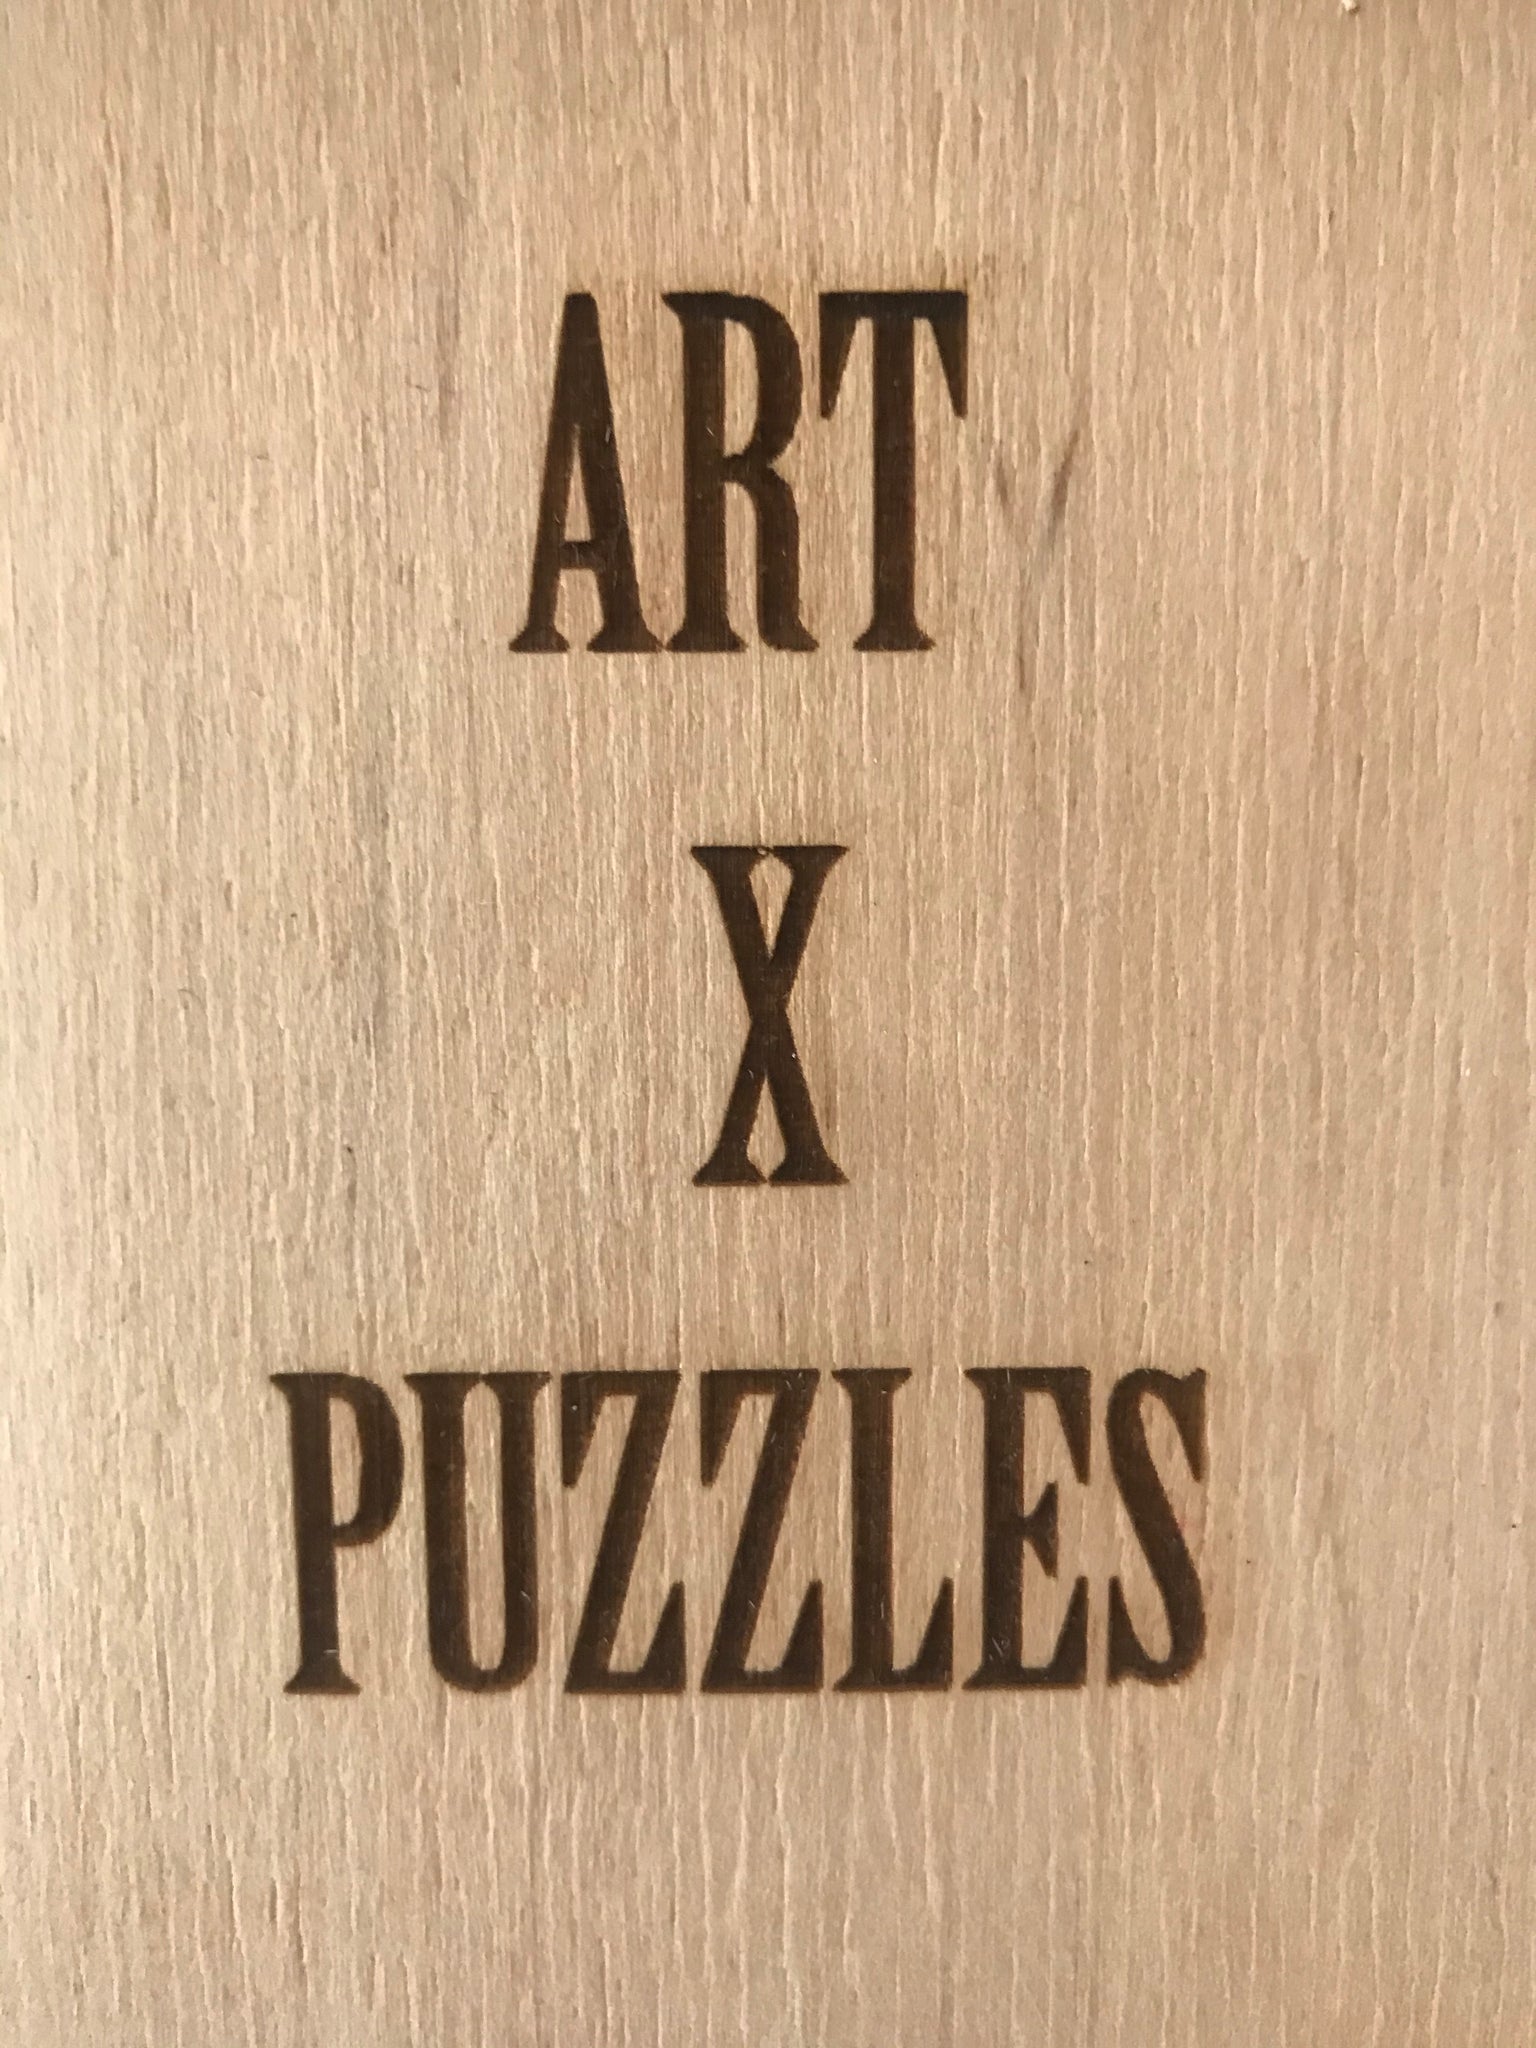 Artist Melissa Guevara Collector Edition Jigsaw Puzzle